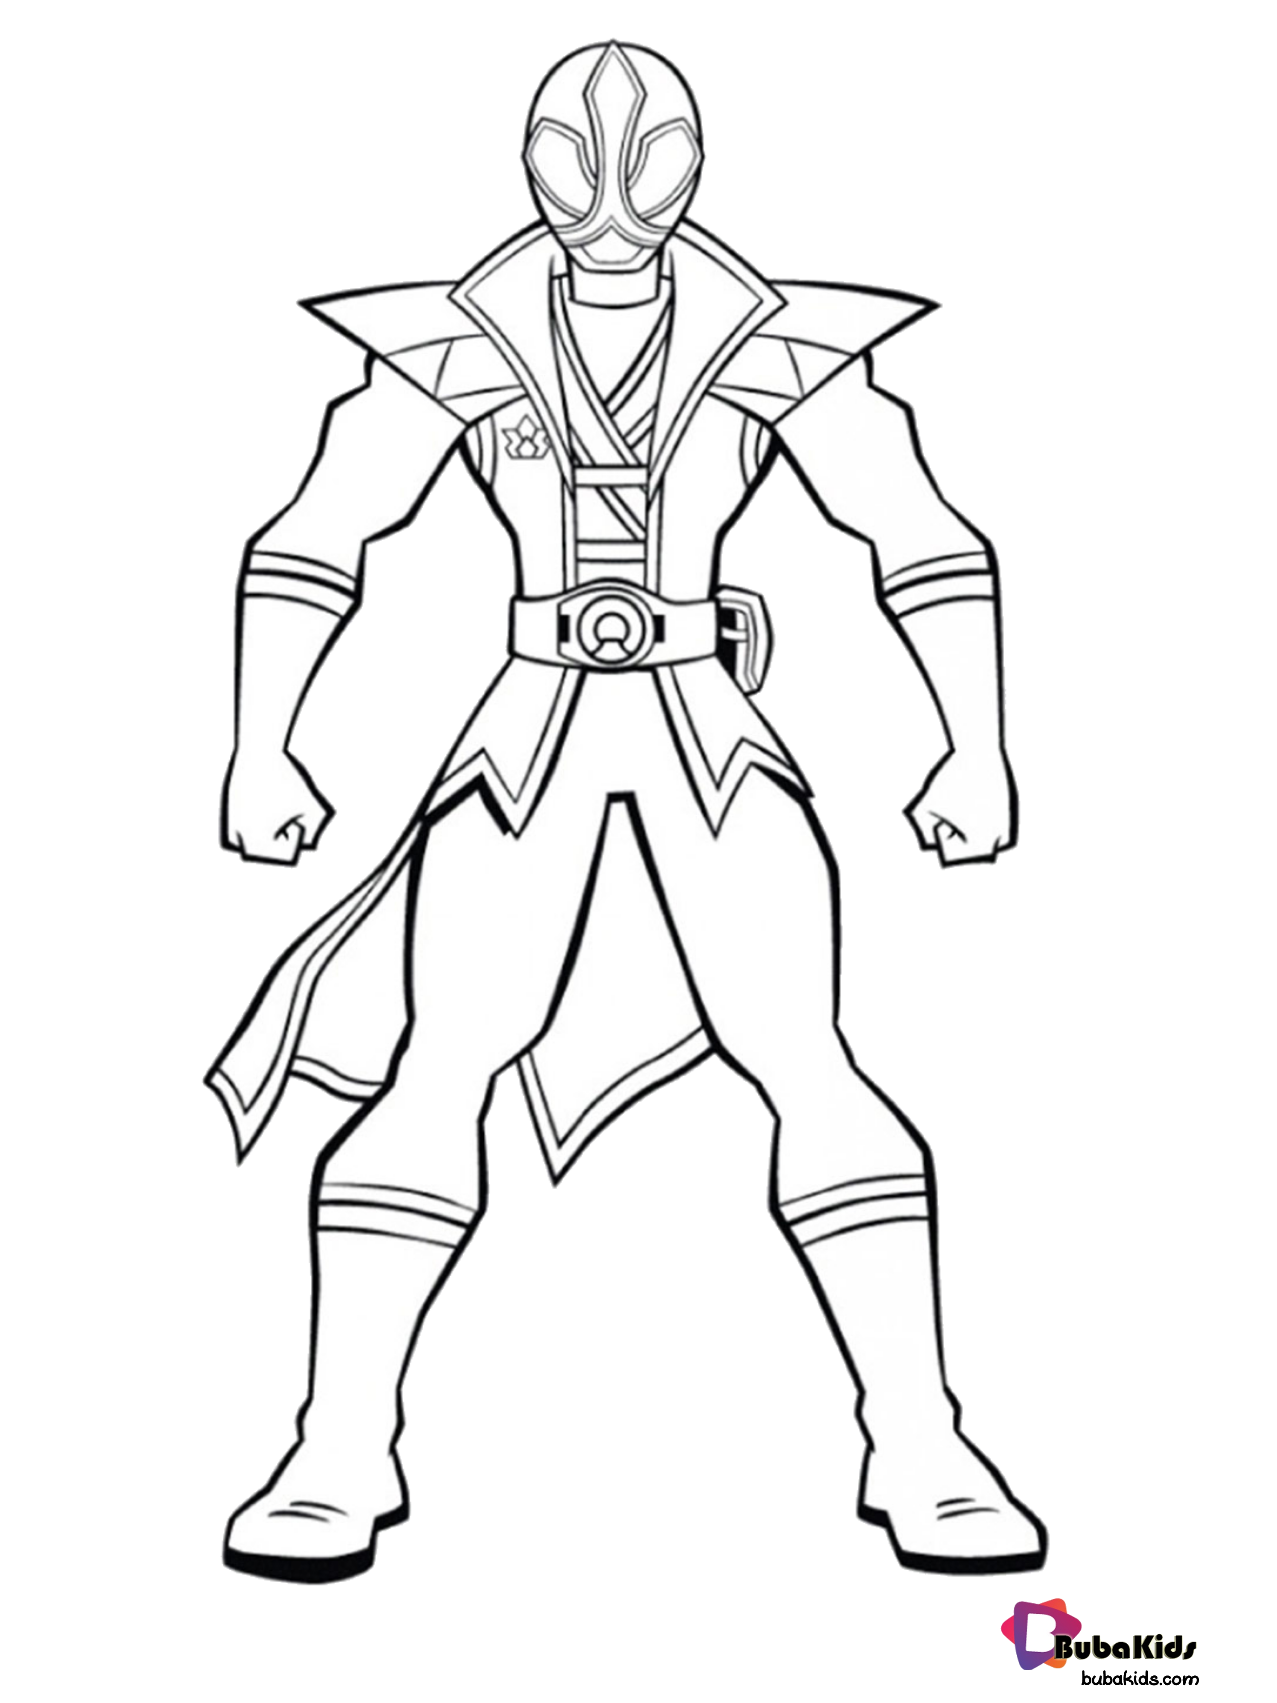 Free download Power Ranger Megaforce coloring page.